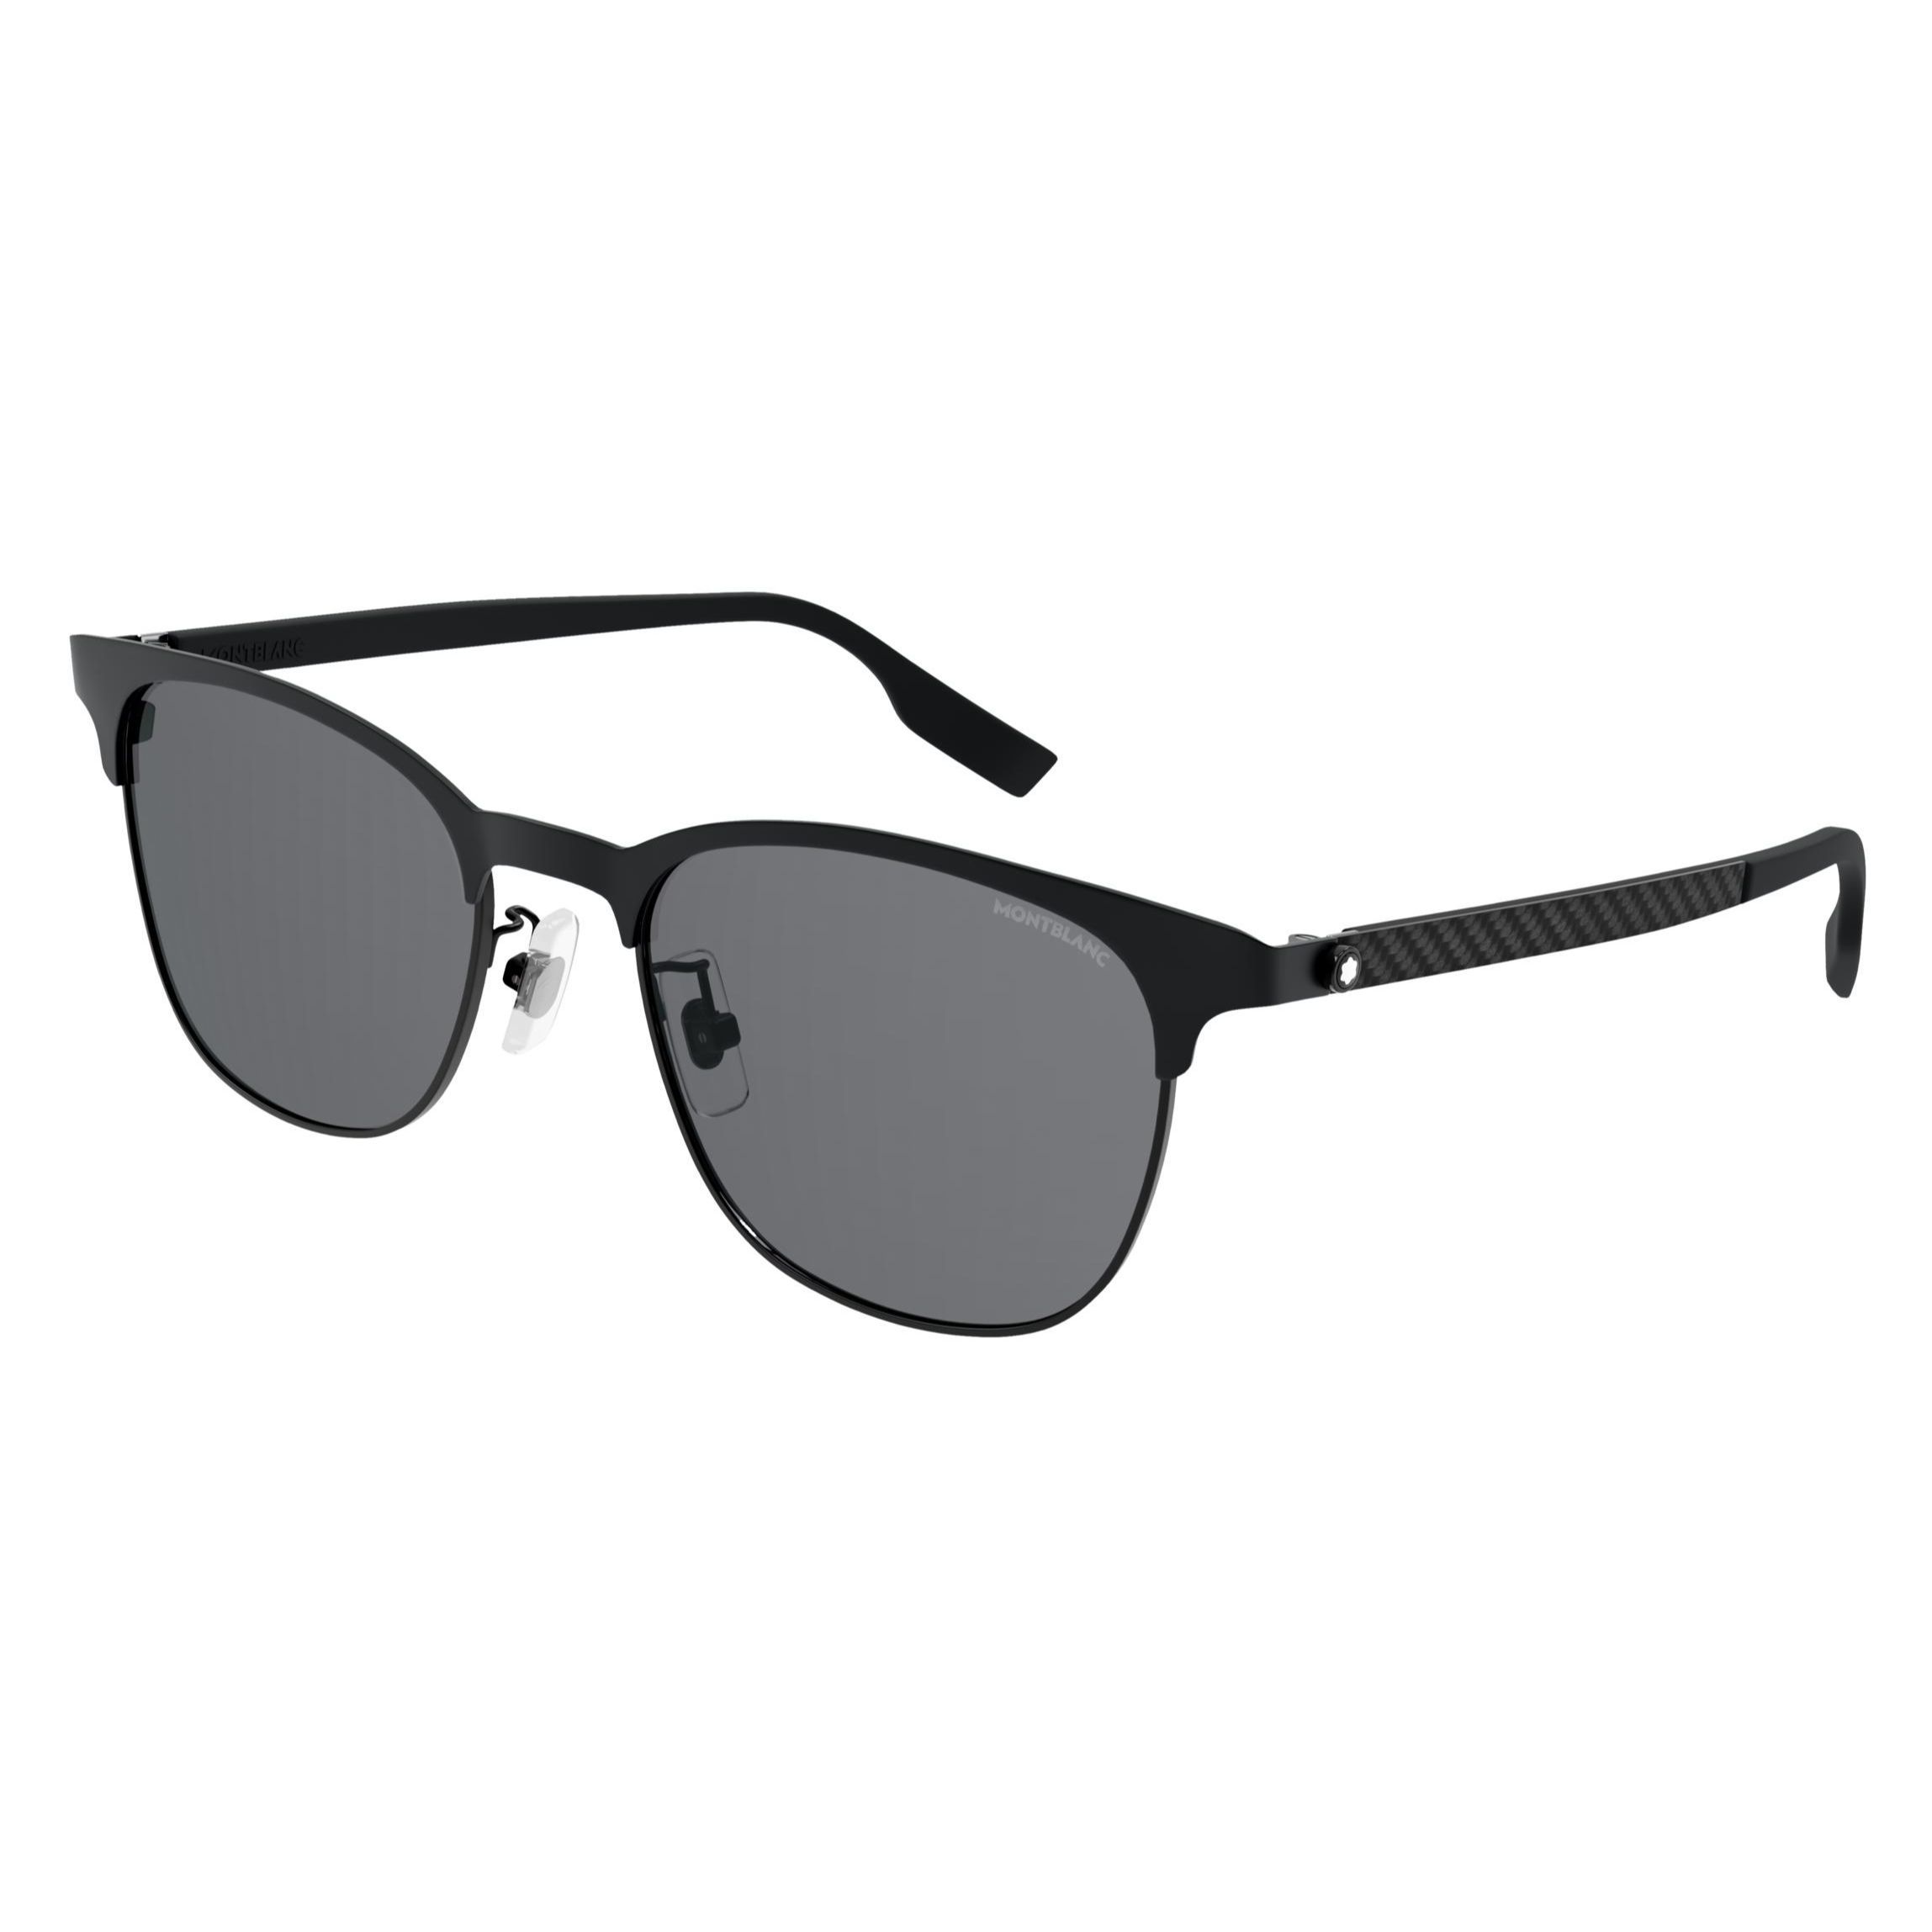 MB0183S Panthos Sunglasses 001 - size 53